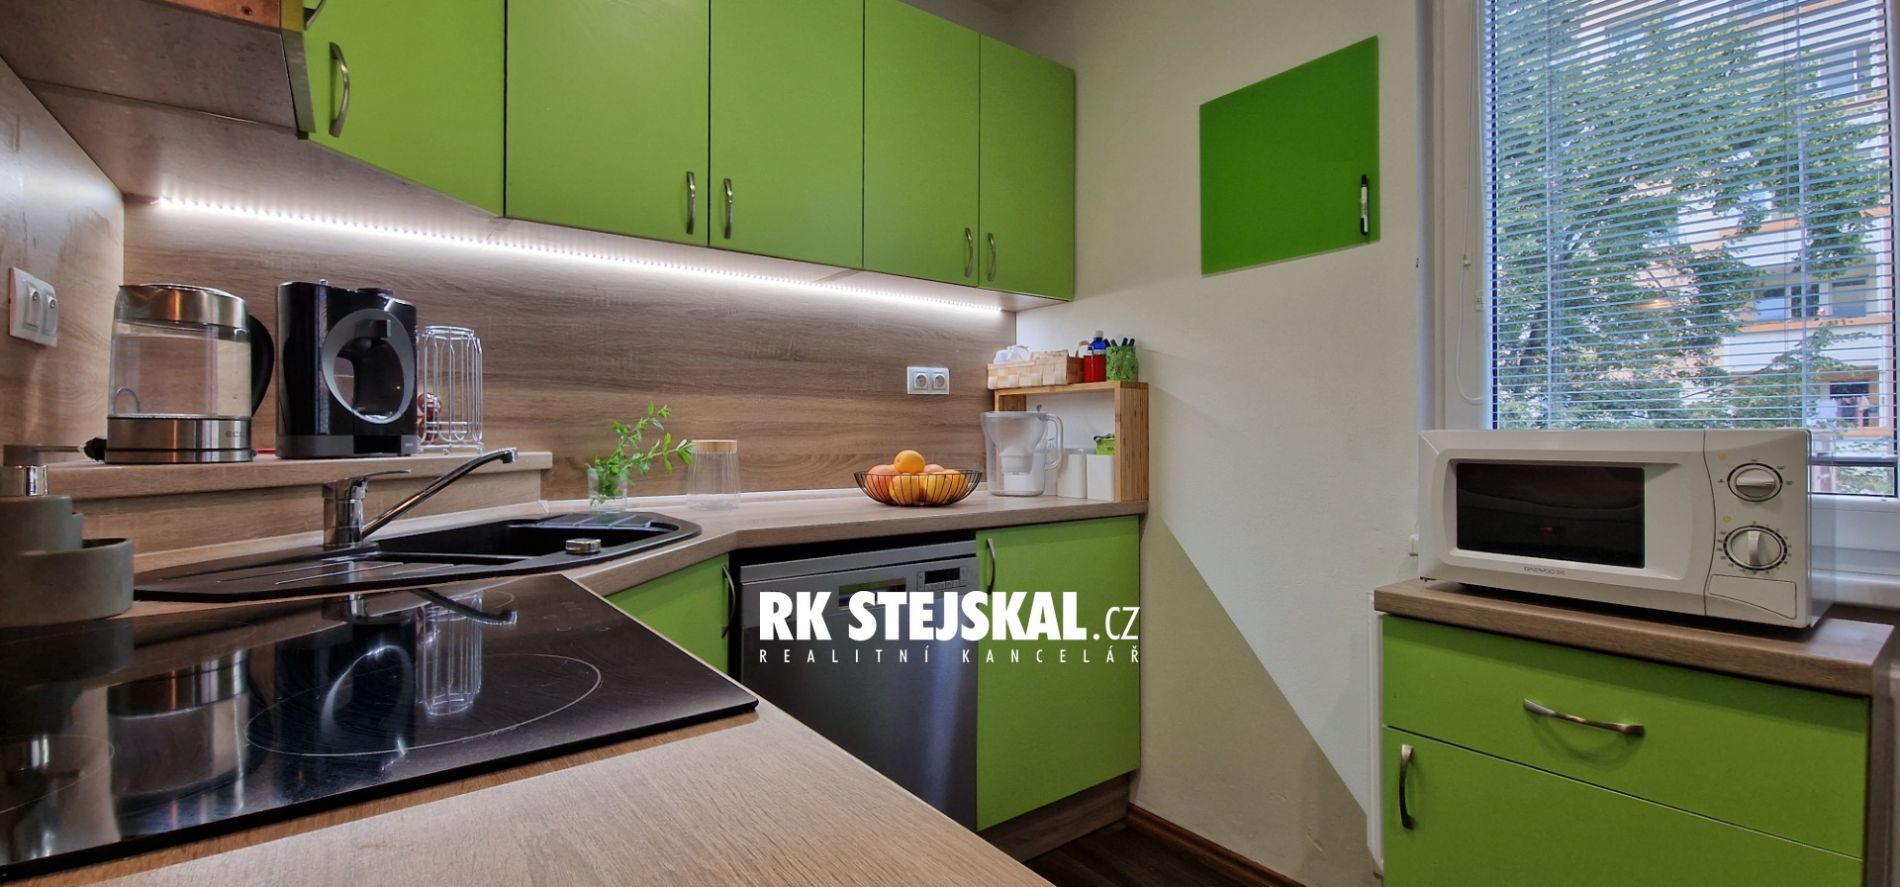 Prodej bytu 3+1 s lodžií, 78 m2 - Český Krumlov - Domoradice, obrázek č. 1